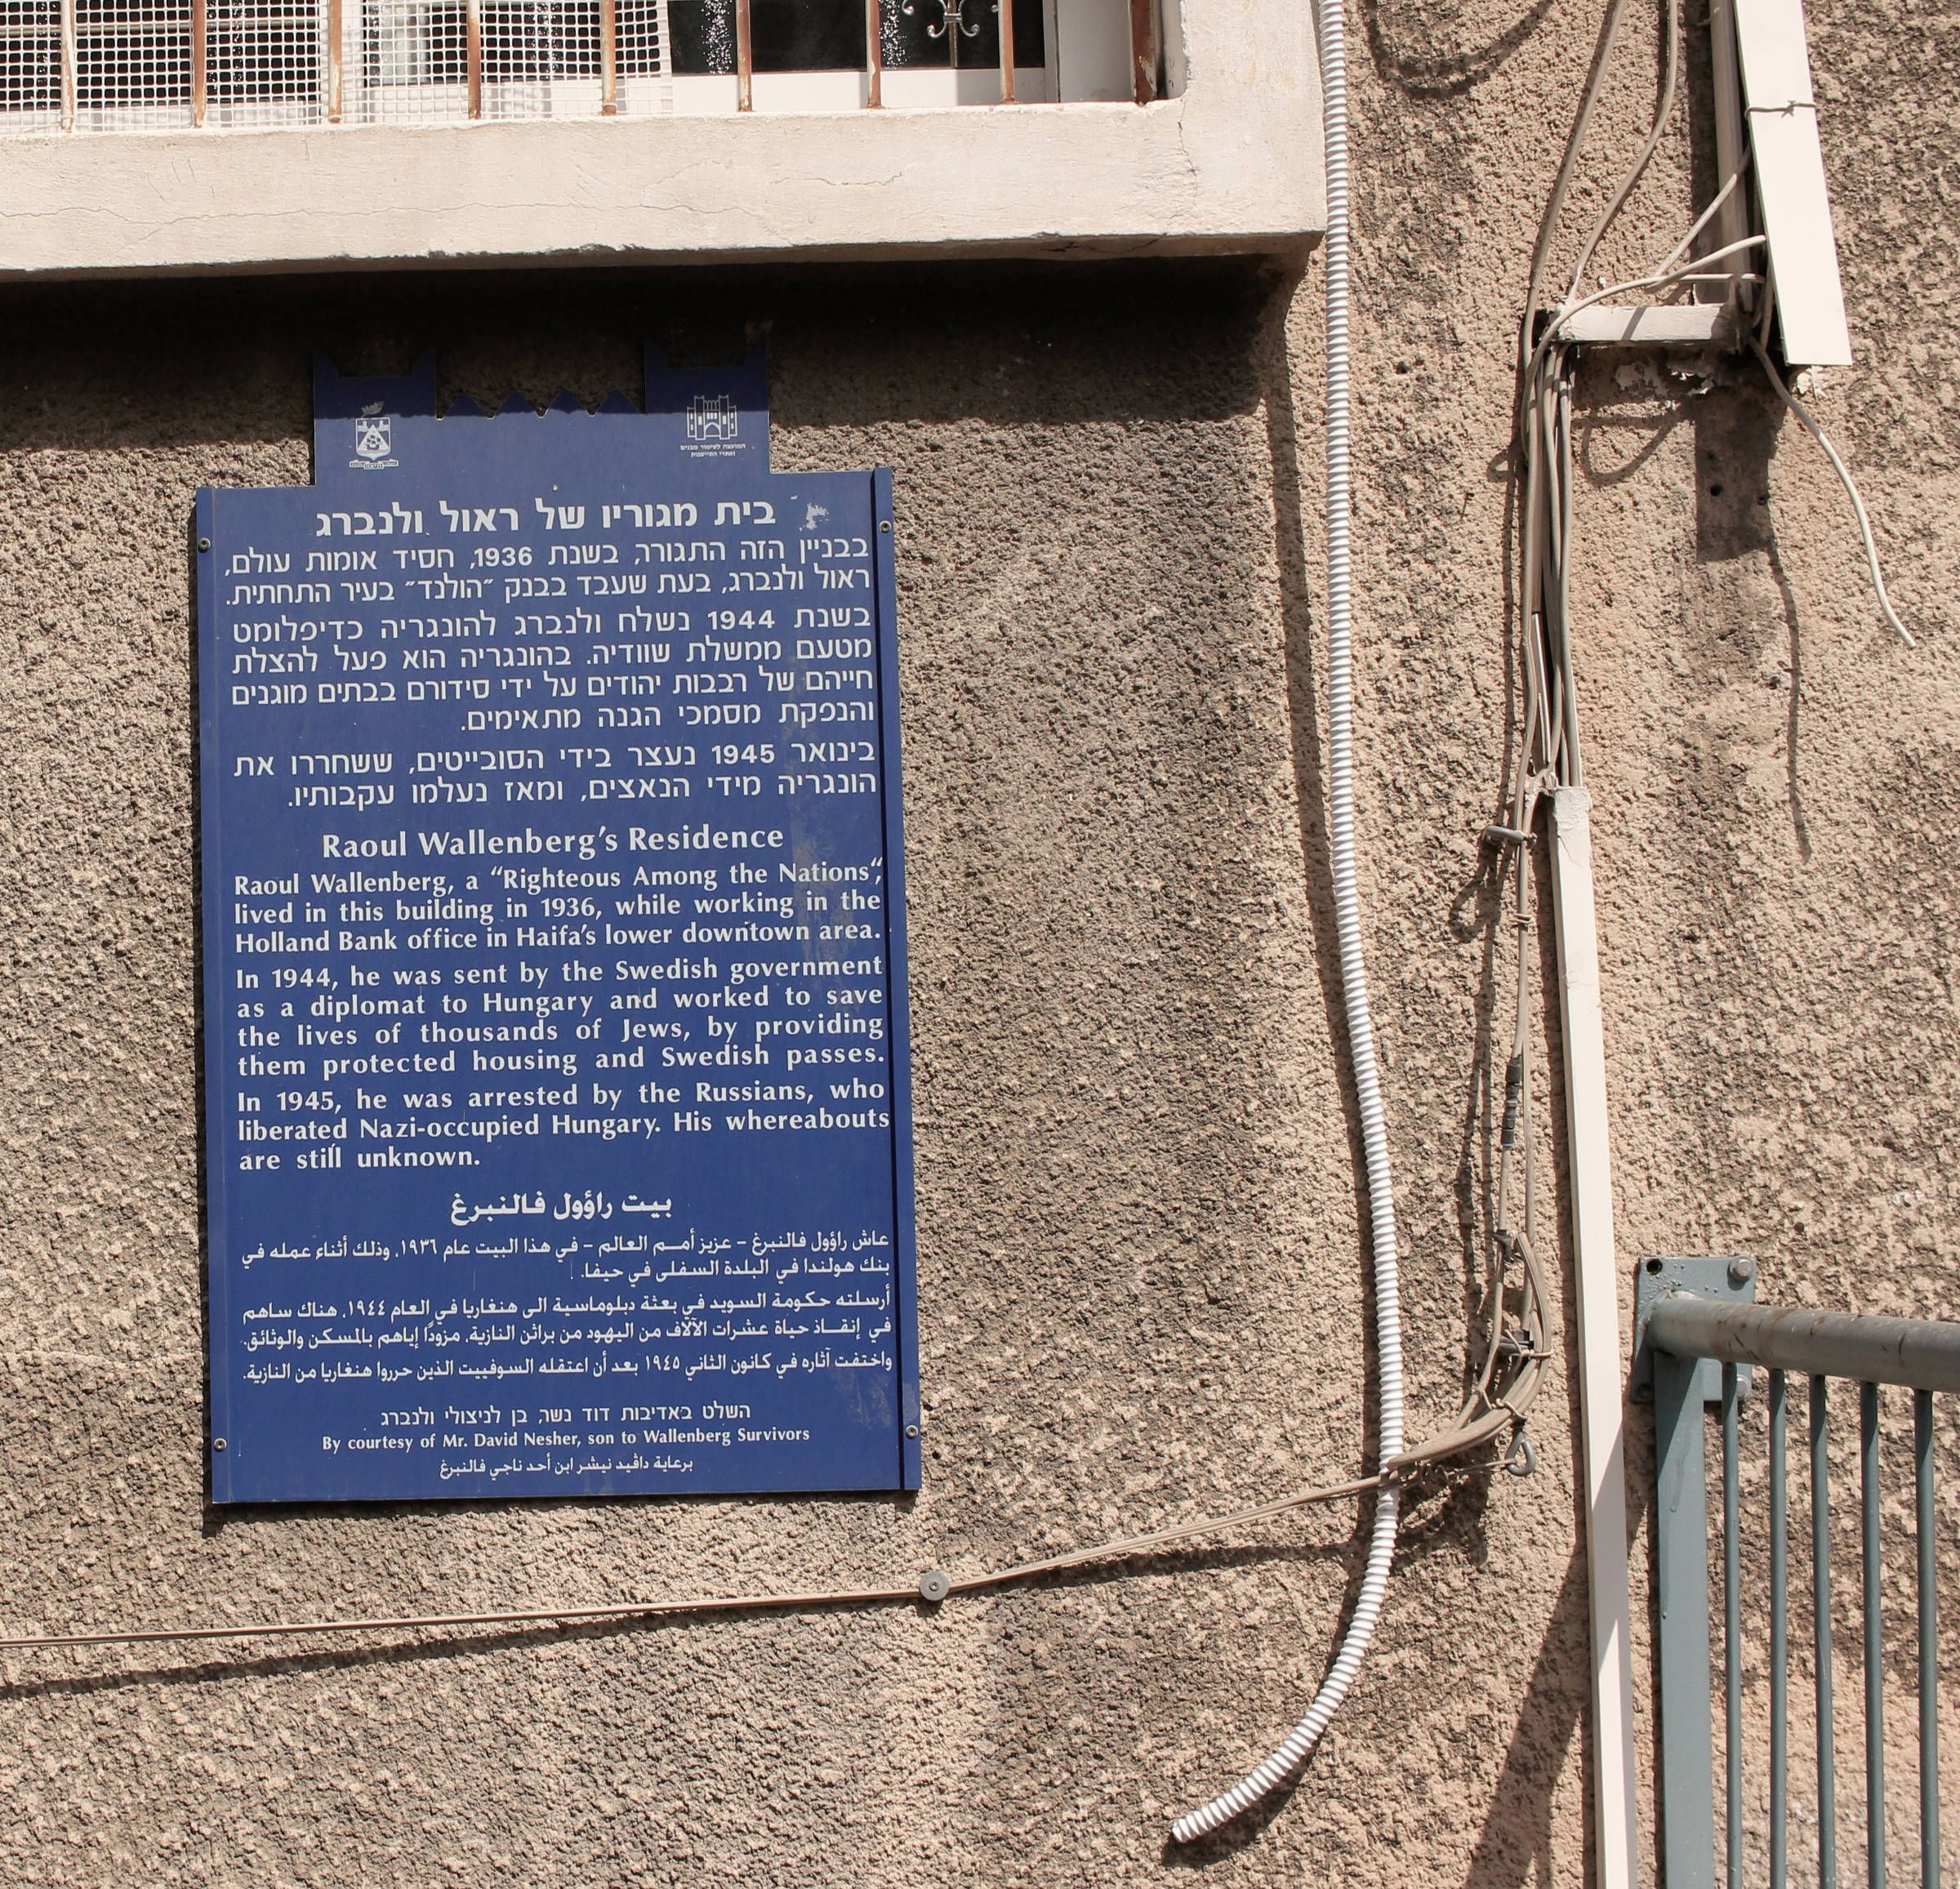 Raoul Wallenberg's house, Poverty in Israel, Arlozorov St., Haifa, Israel